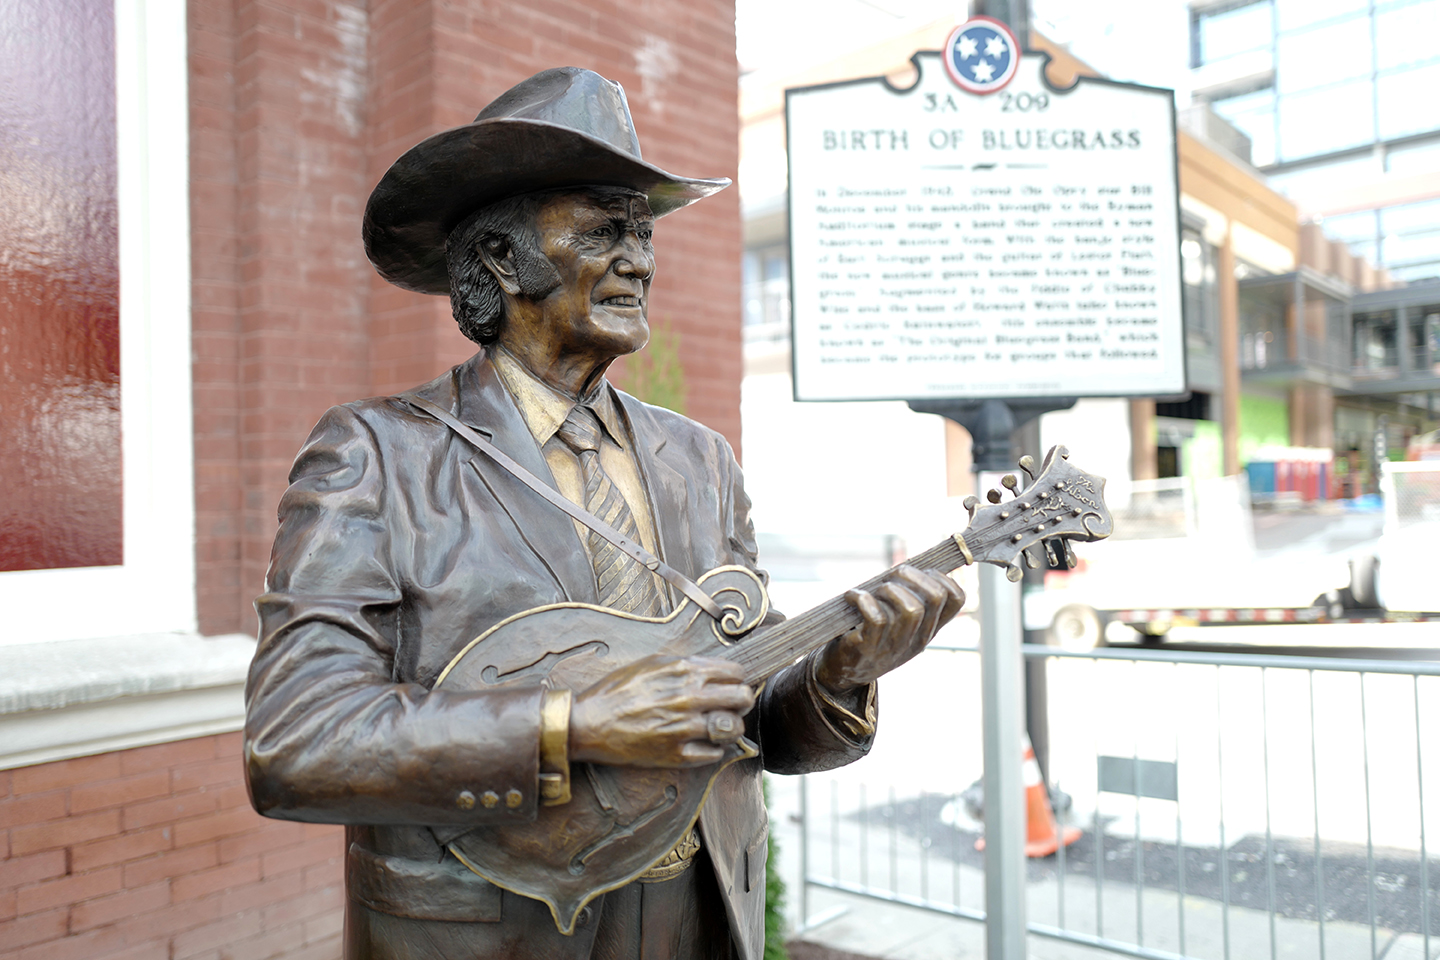 The "Father of Bluegrass" Bill Monroe